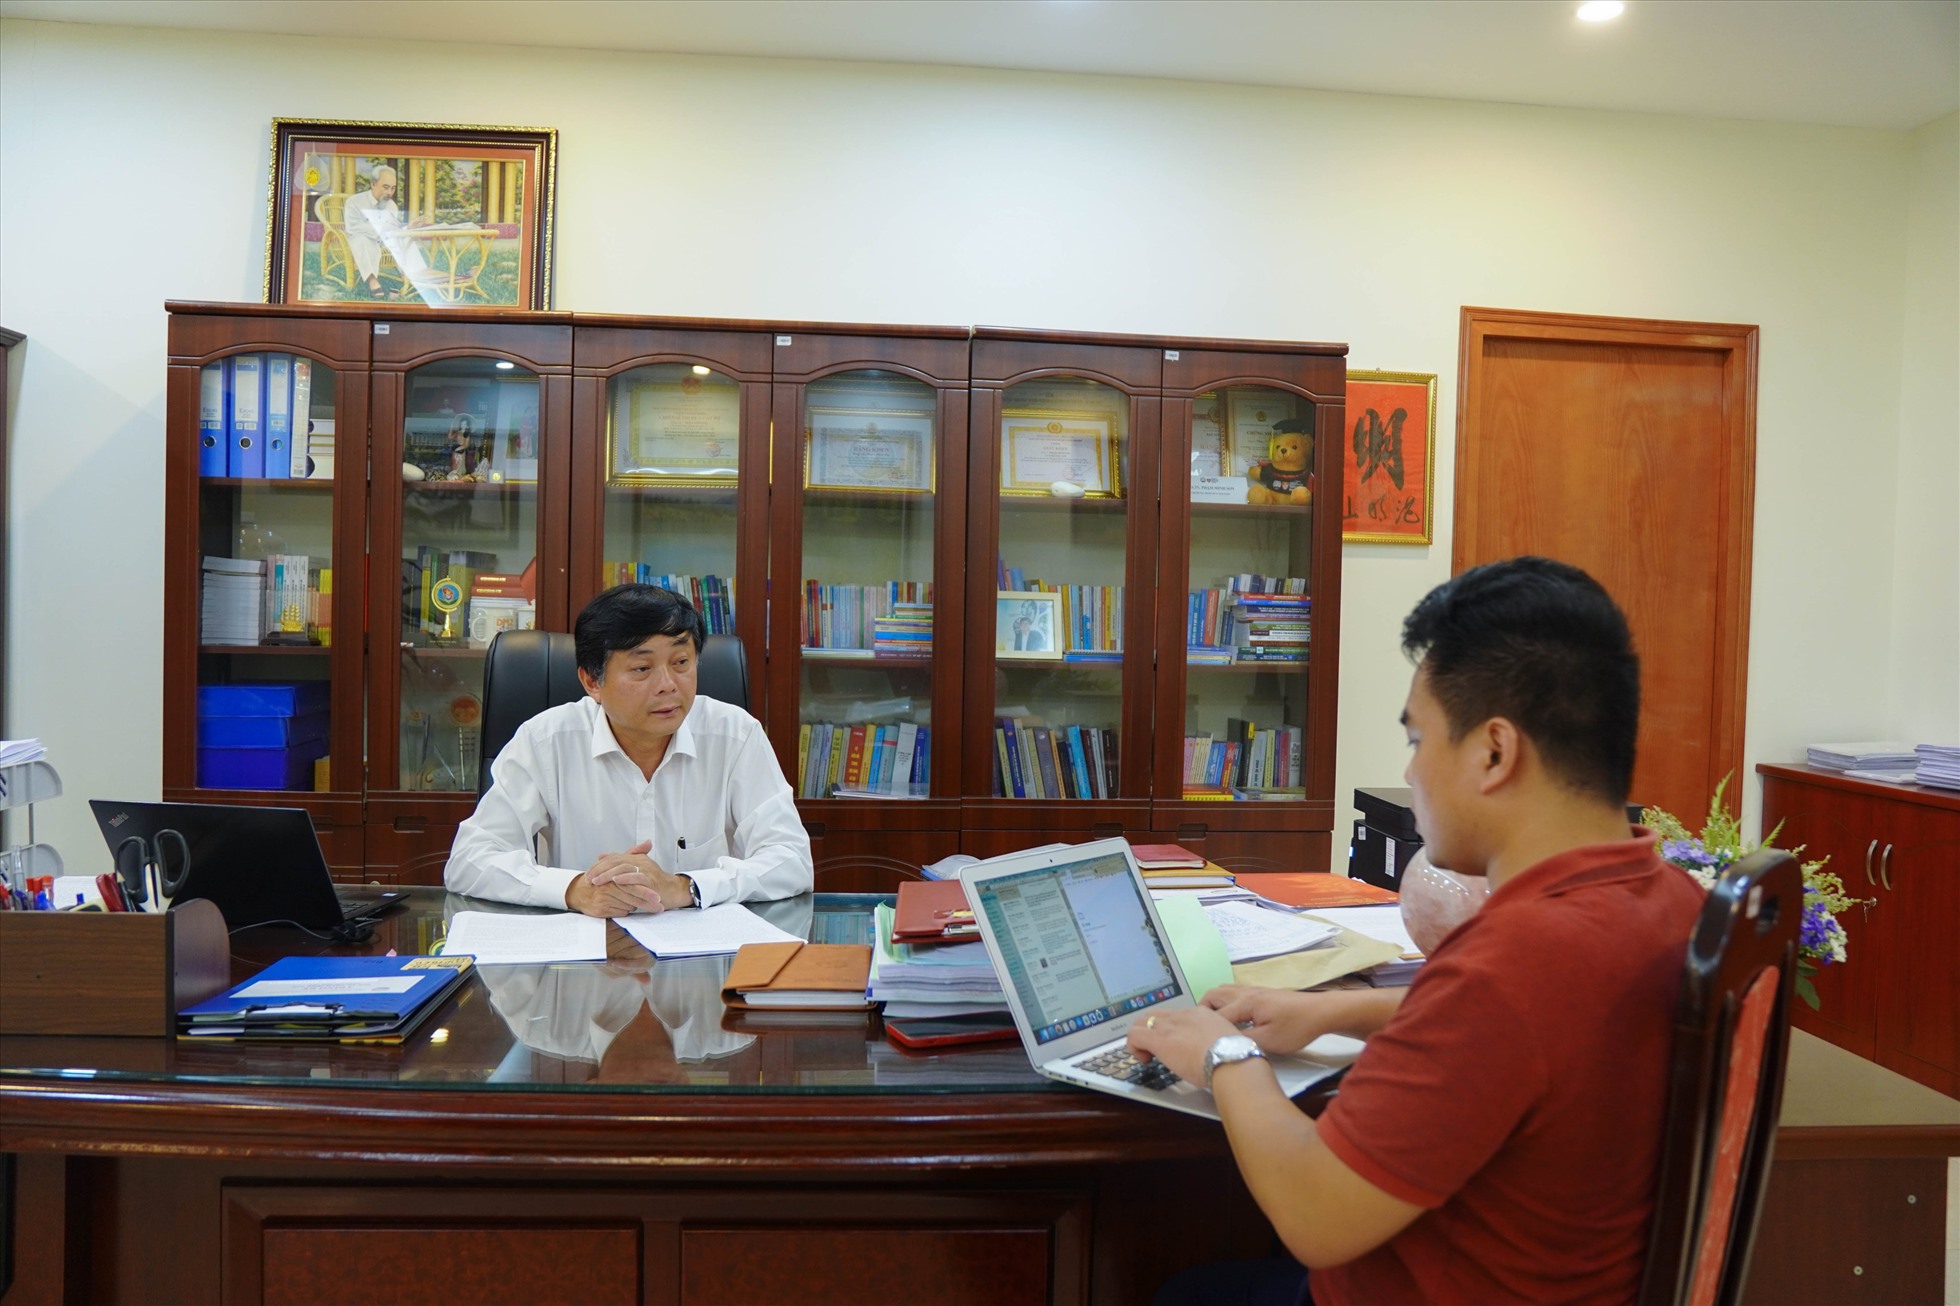 PV Lao Dong หารือกับรองศาสตราจารย์ Dr. Pham Minh Son - ผู้อำนวยการสถาบันวารสารศาสตร์และการโฆษณาชวนเชื่อ  ภาพถ่าย: “Huu Chanh .”